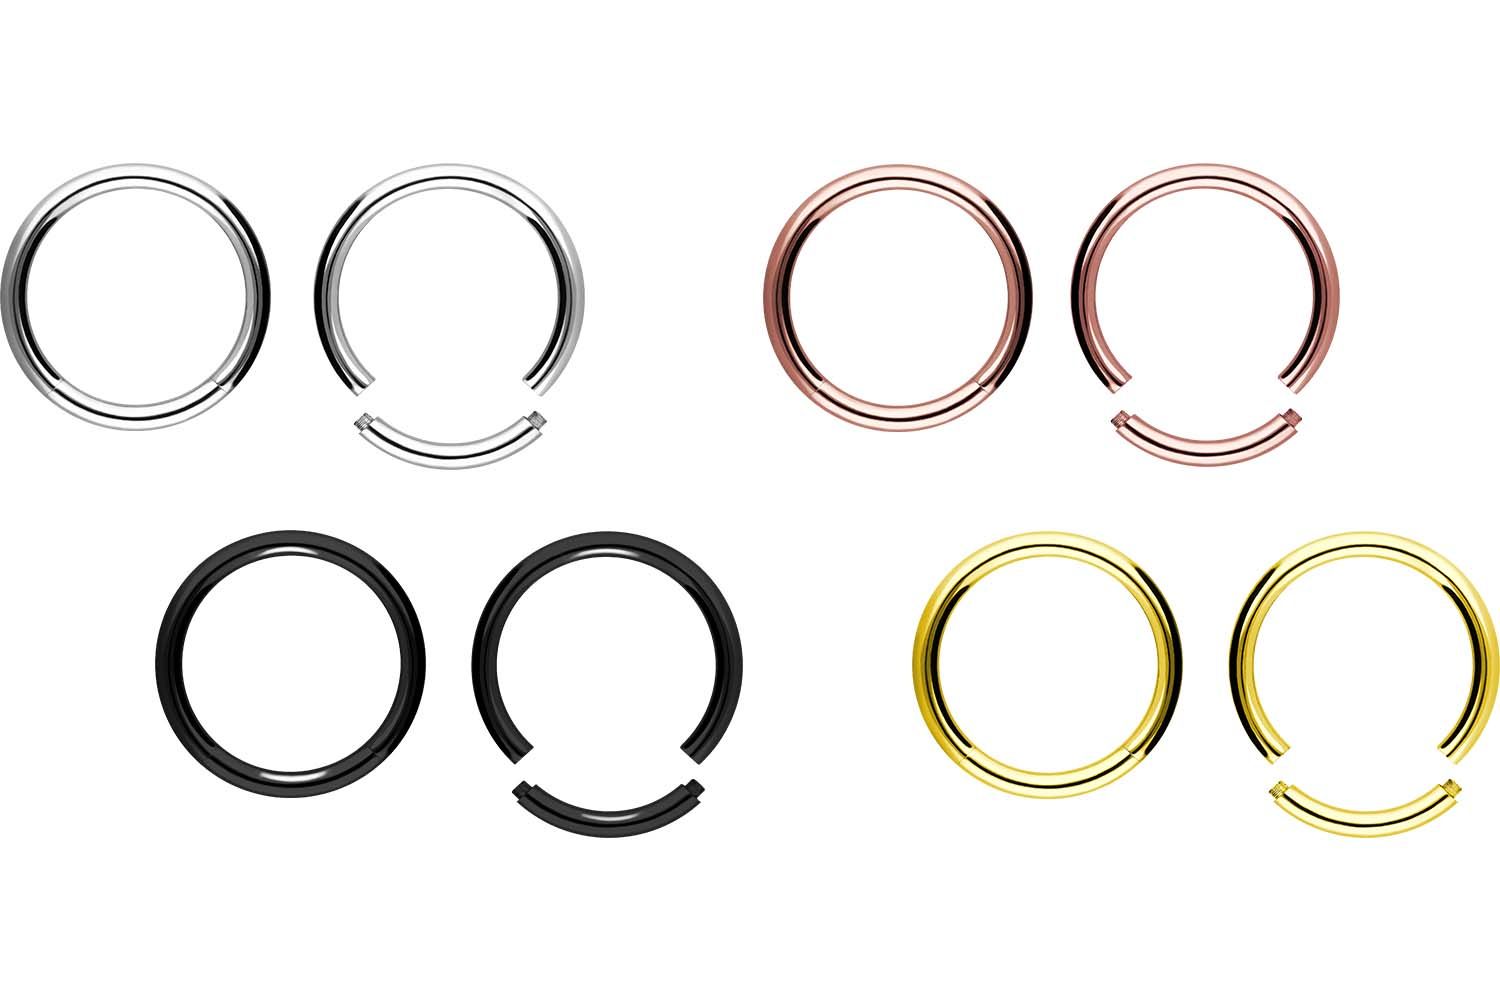 Surgical steel segment ring